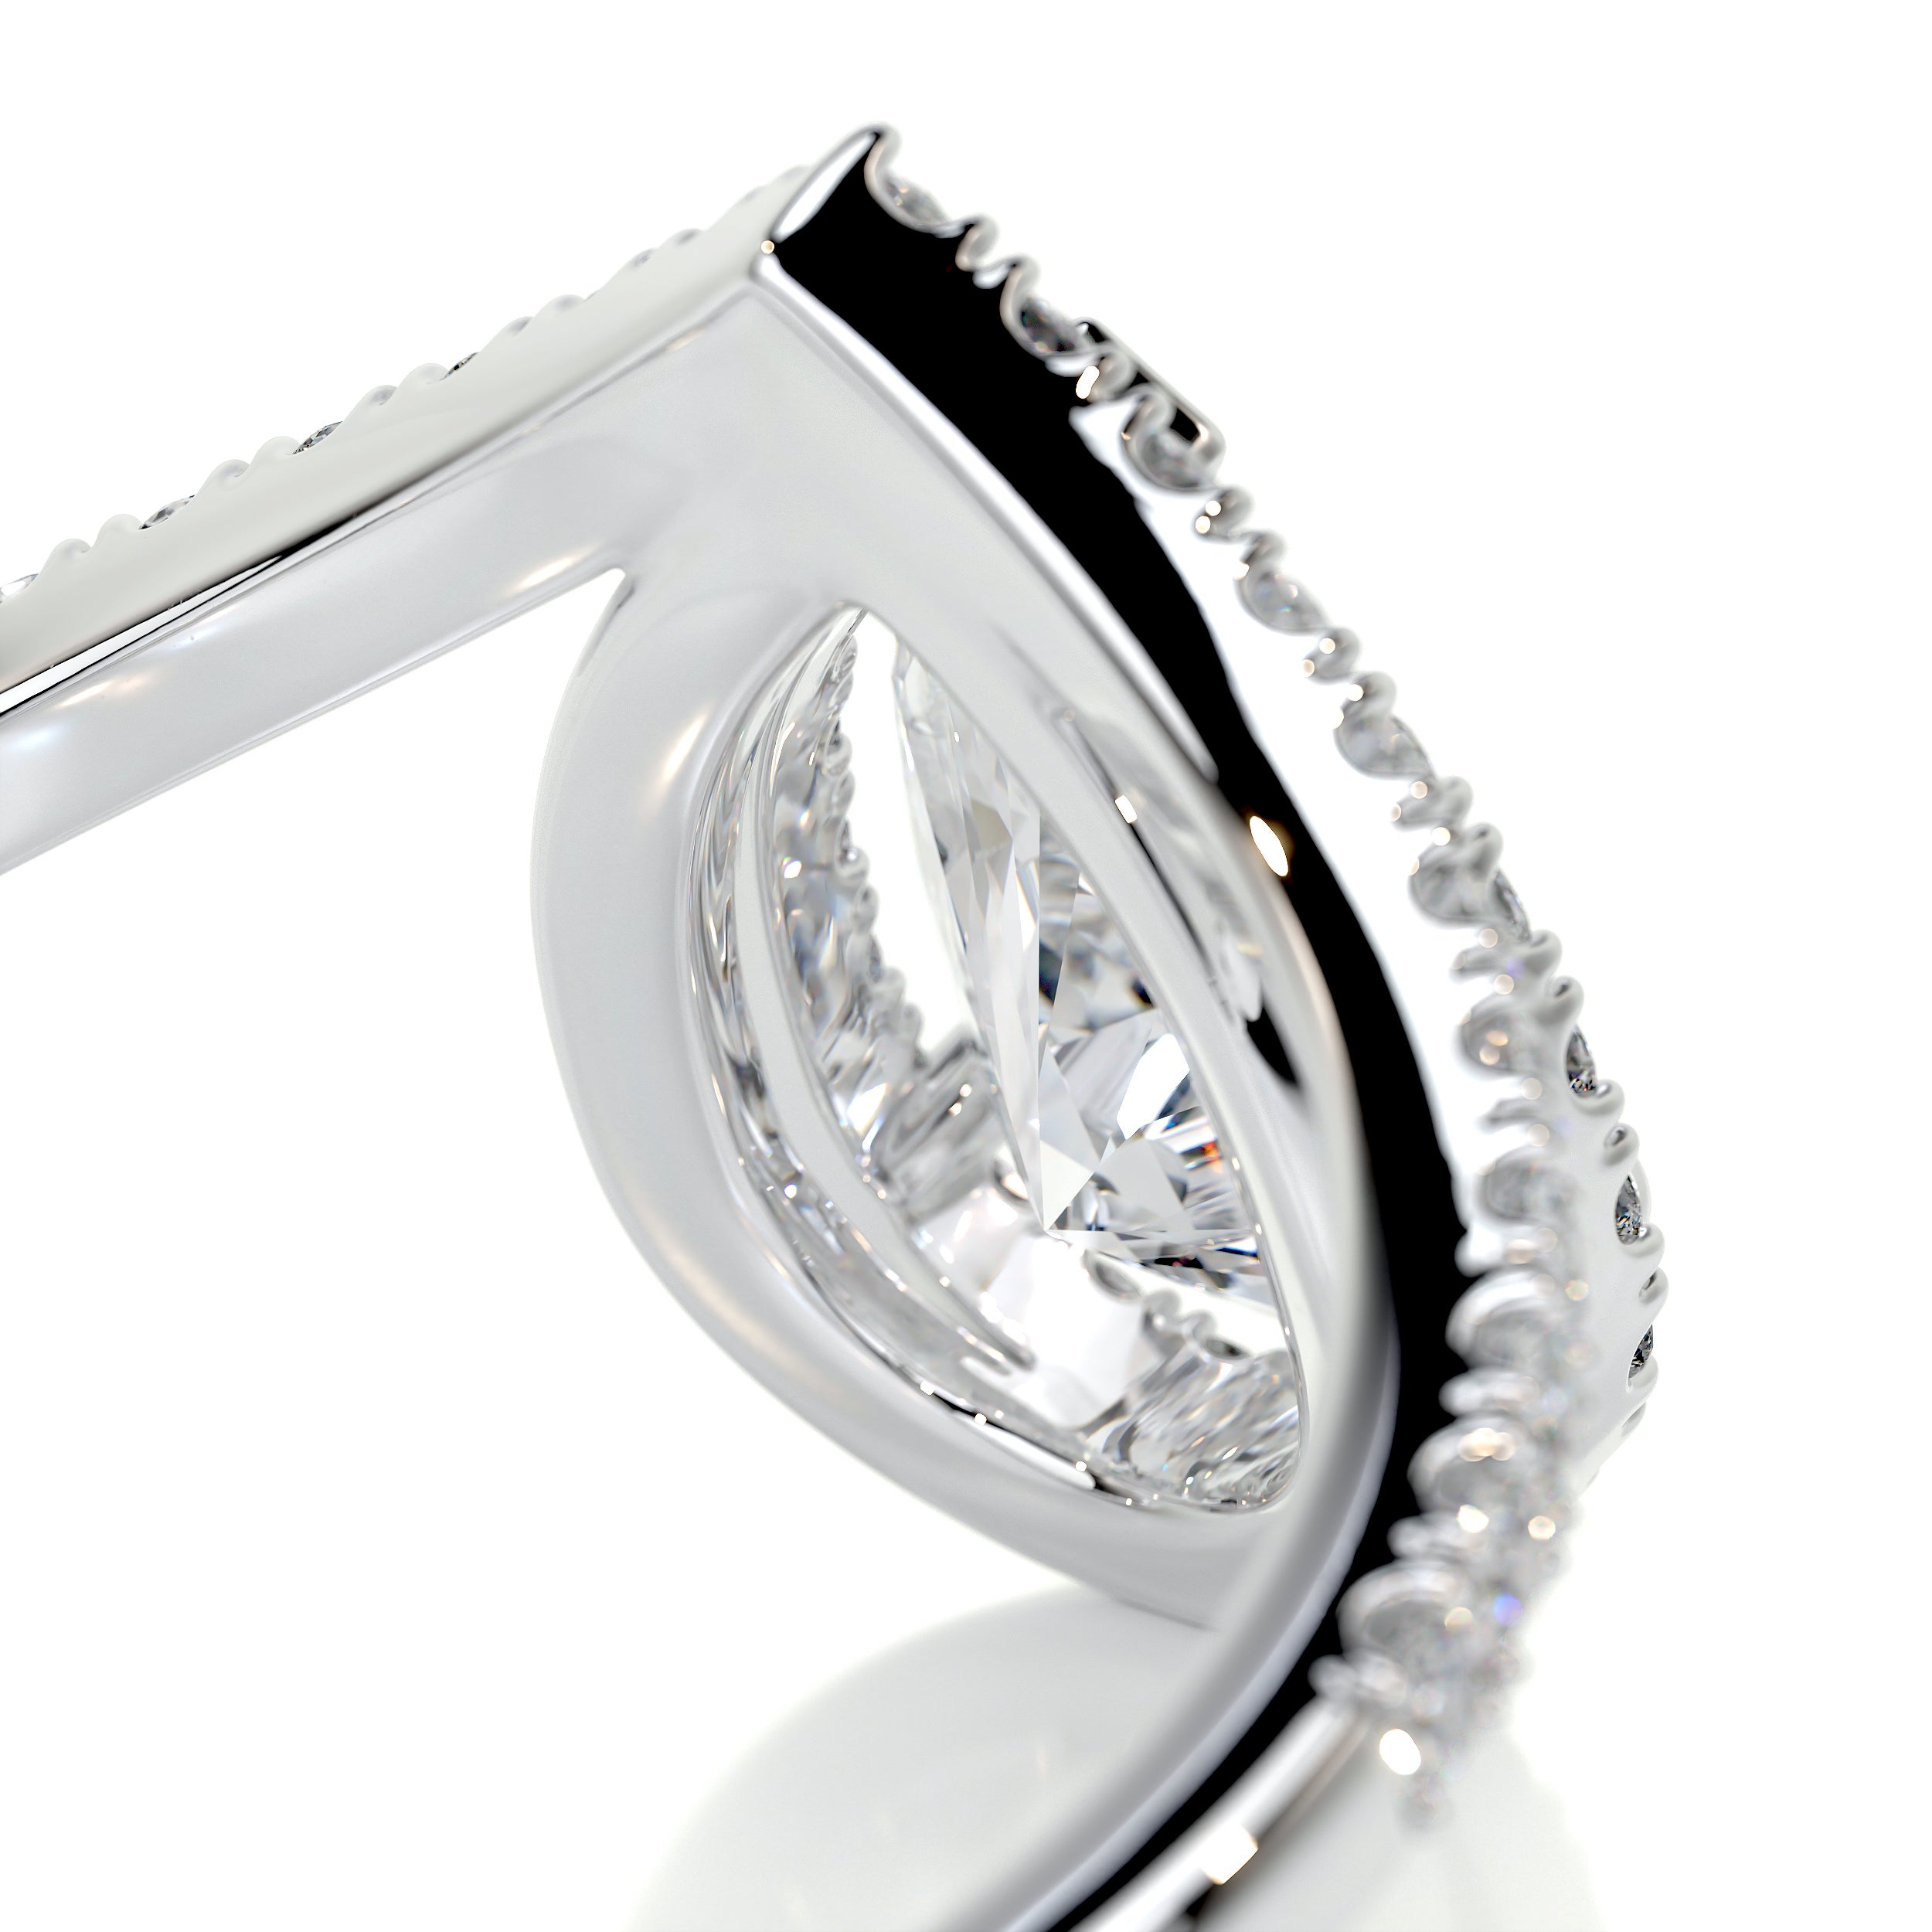 Miranda Diamond Engagement Ring   (1.55 Carat) -Platinum